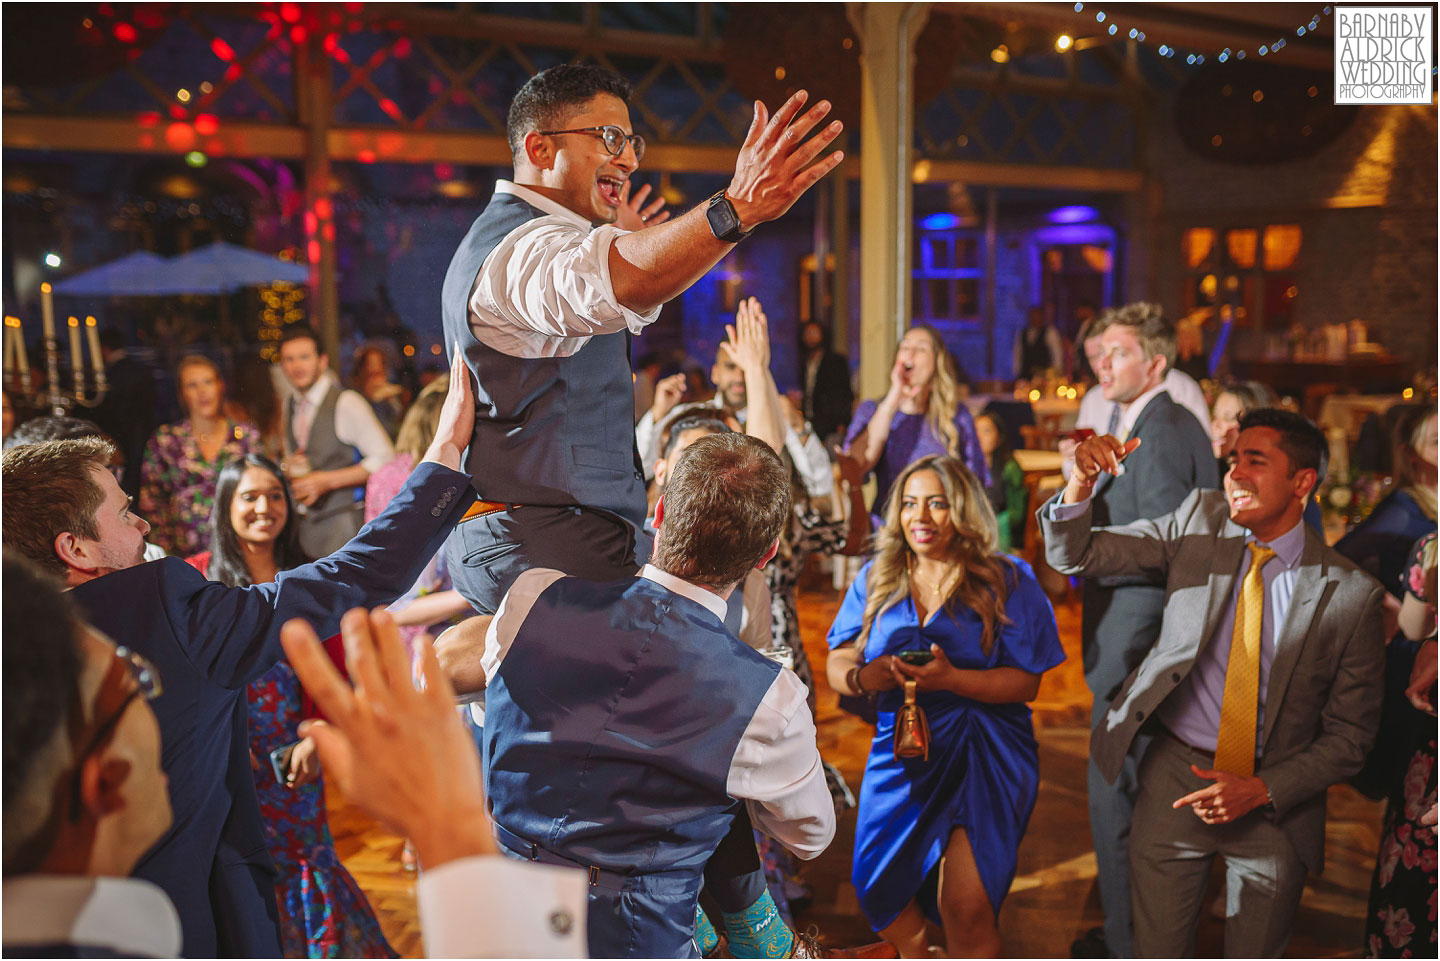 Thornbridge Hall dancing wedding photos 